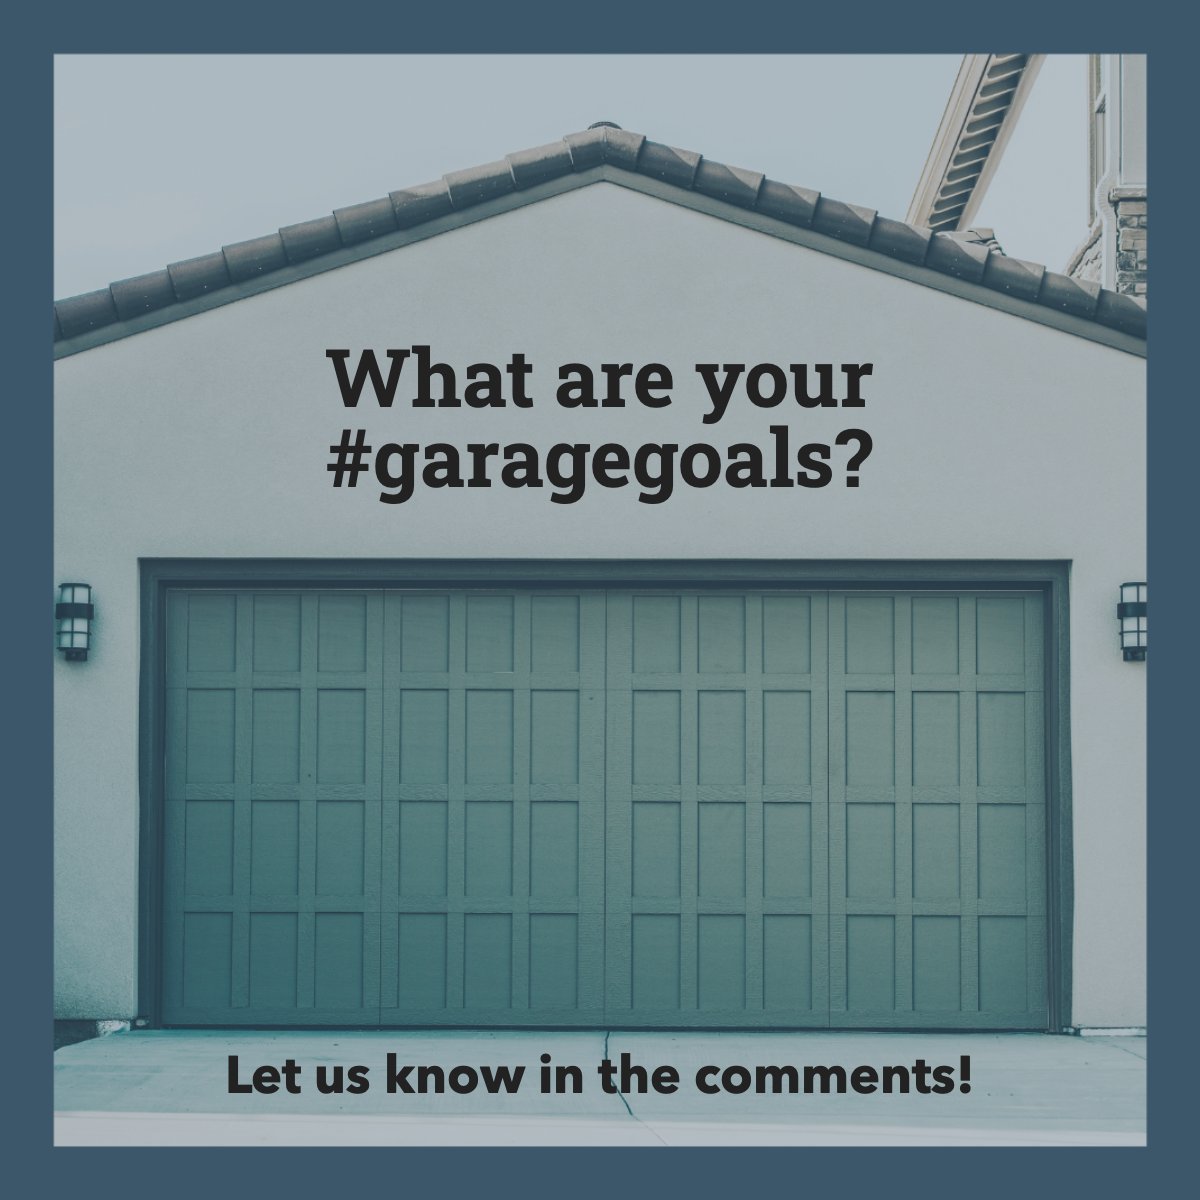 Tell us what your garage goals are in the comments! 👇

#garagegoals #mygarage #dreamgarage #futuregaragegoals